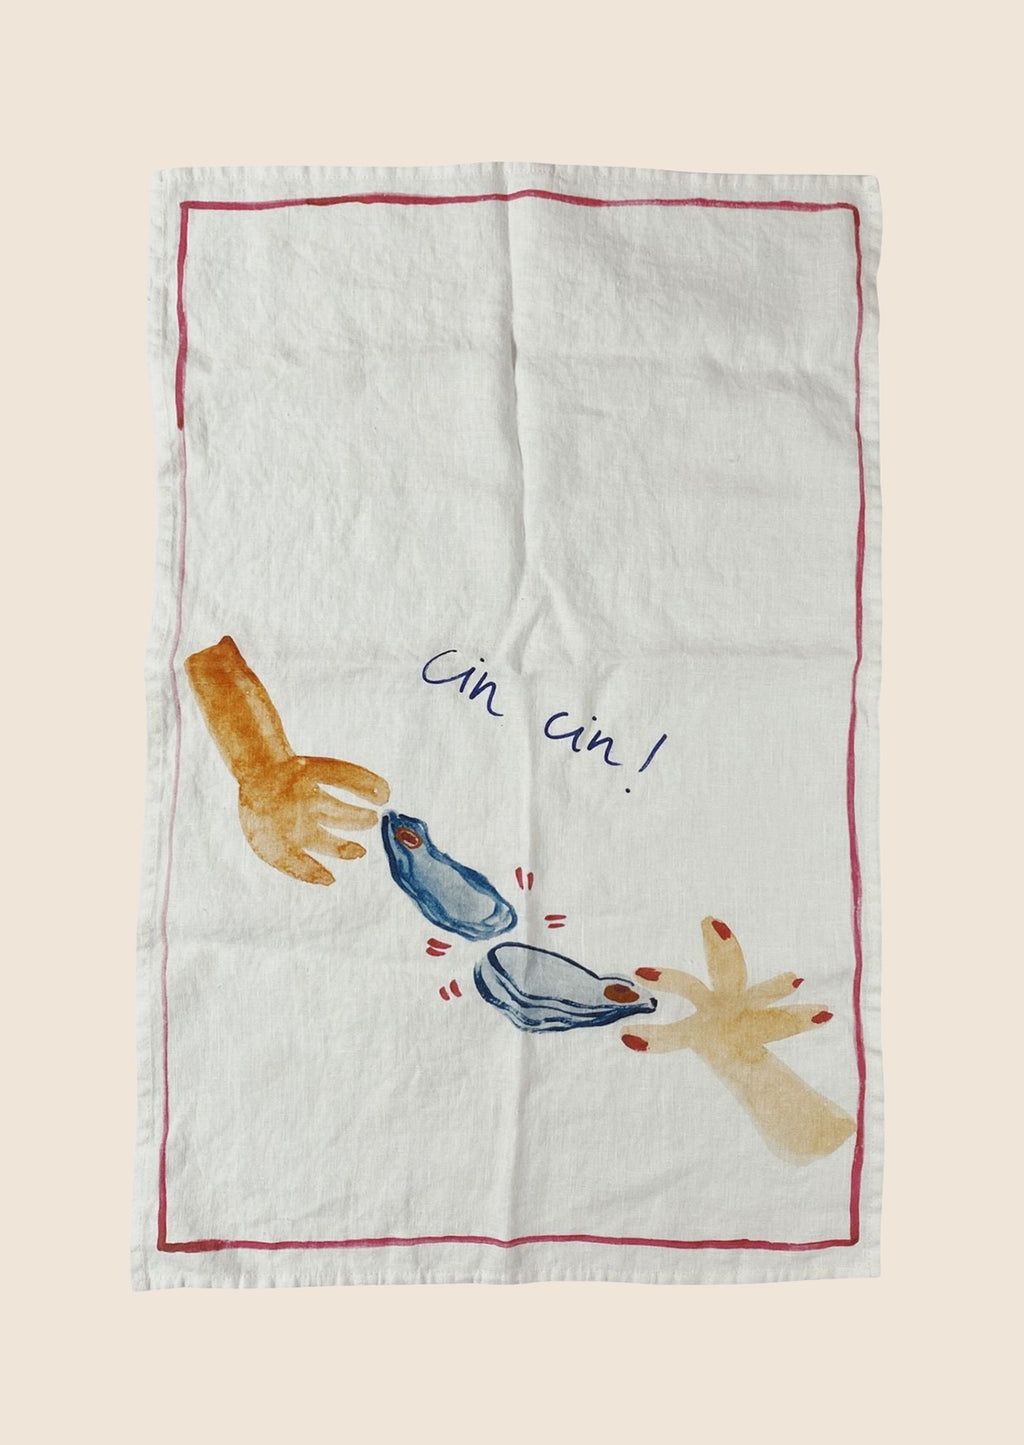 Cin Cin: A white linen tea towel with Cin Cin oyster cheers graphic and text.